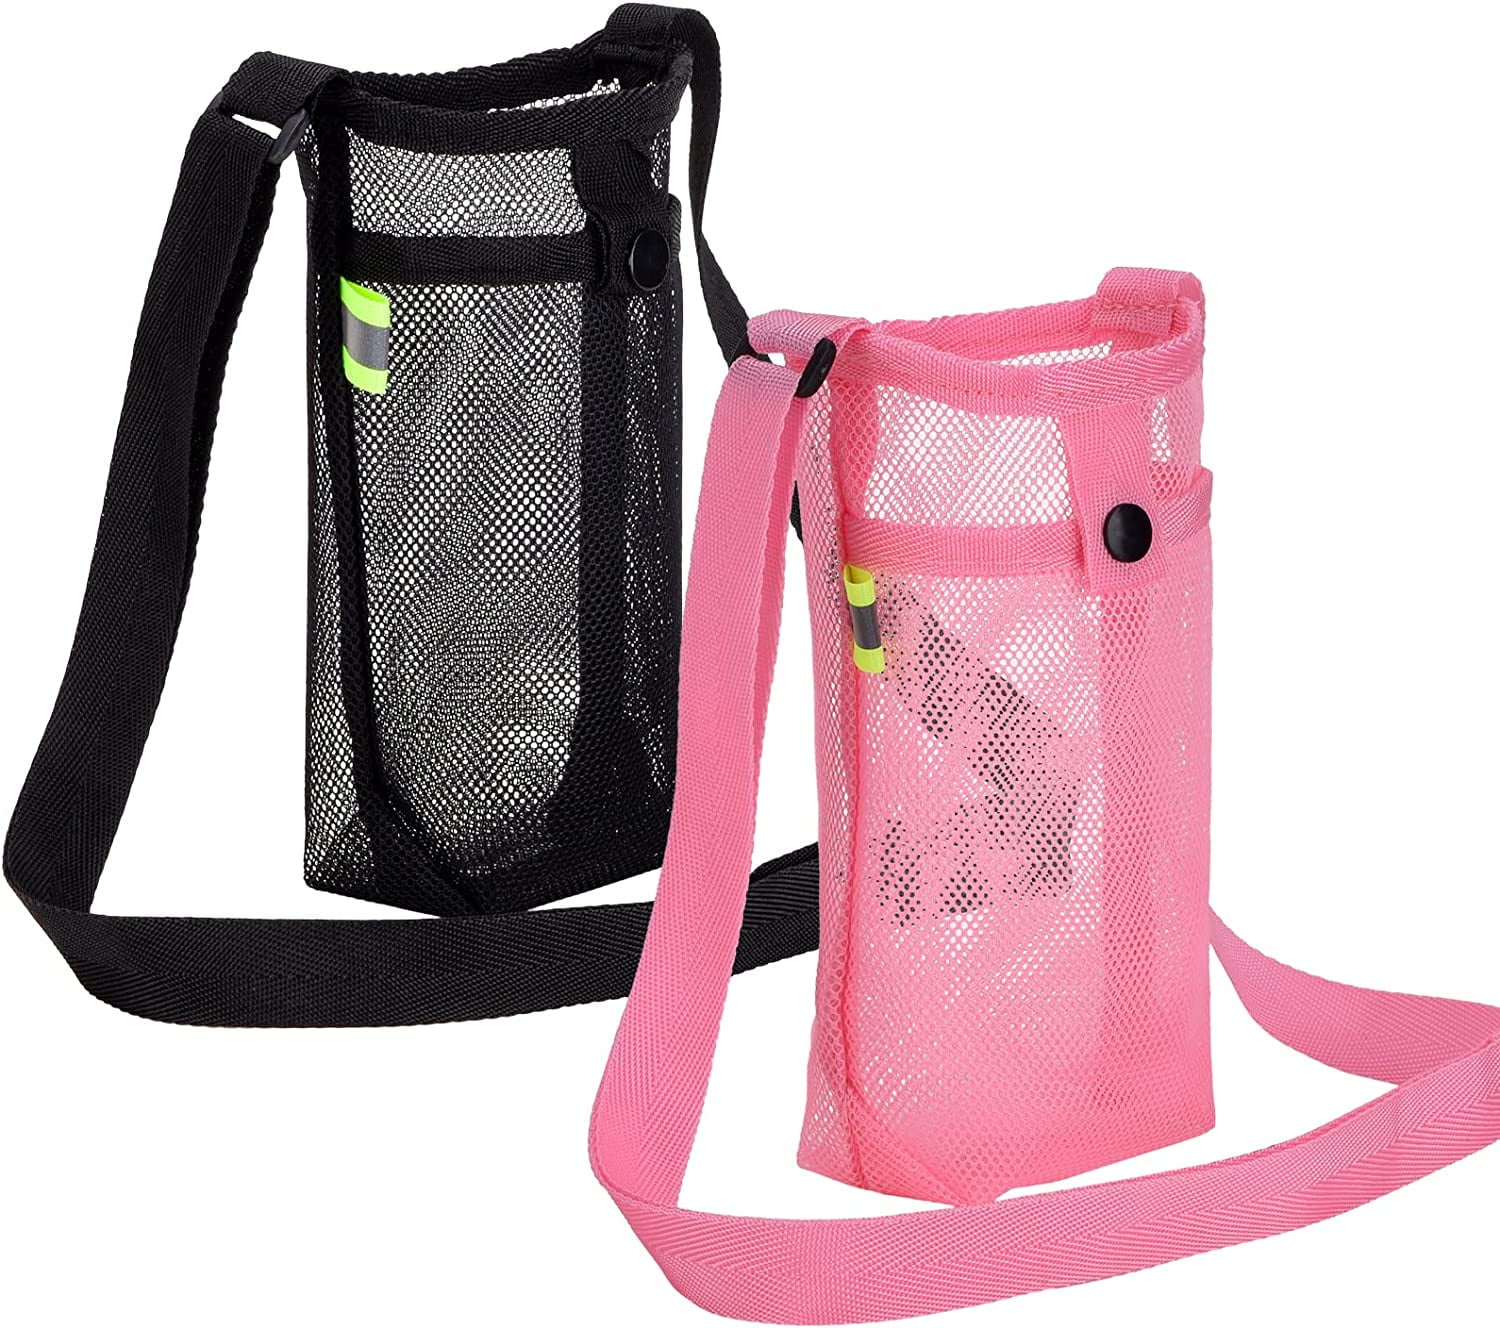 OYT Water Bottle Carrier with Adjustable Shoulder Strap, Universal Bottle Sling, Perfect for Daily Walking Biking Hiking Exclude Bottle, Black